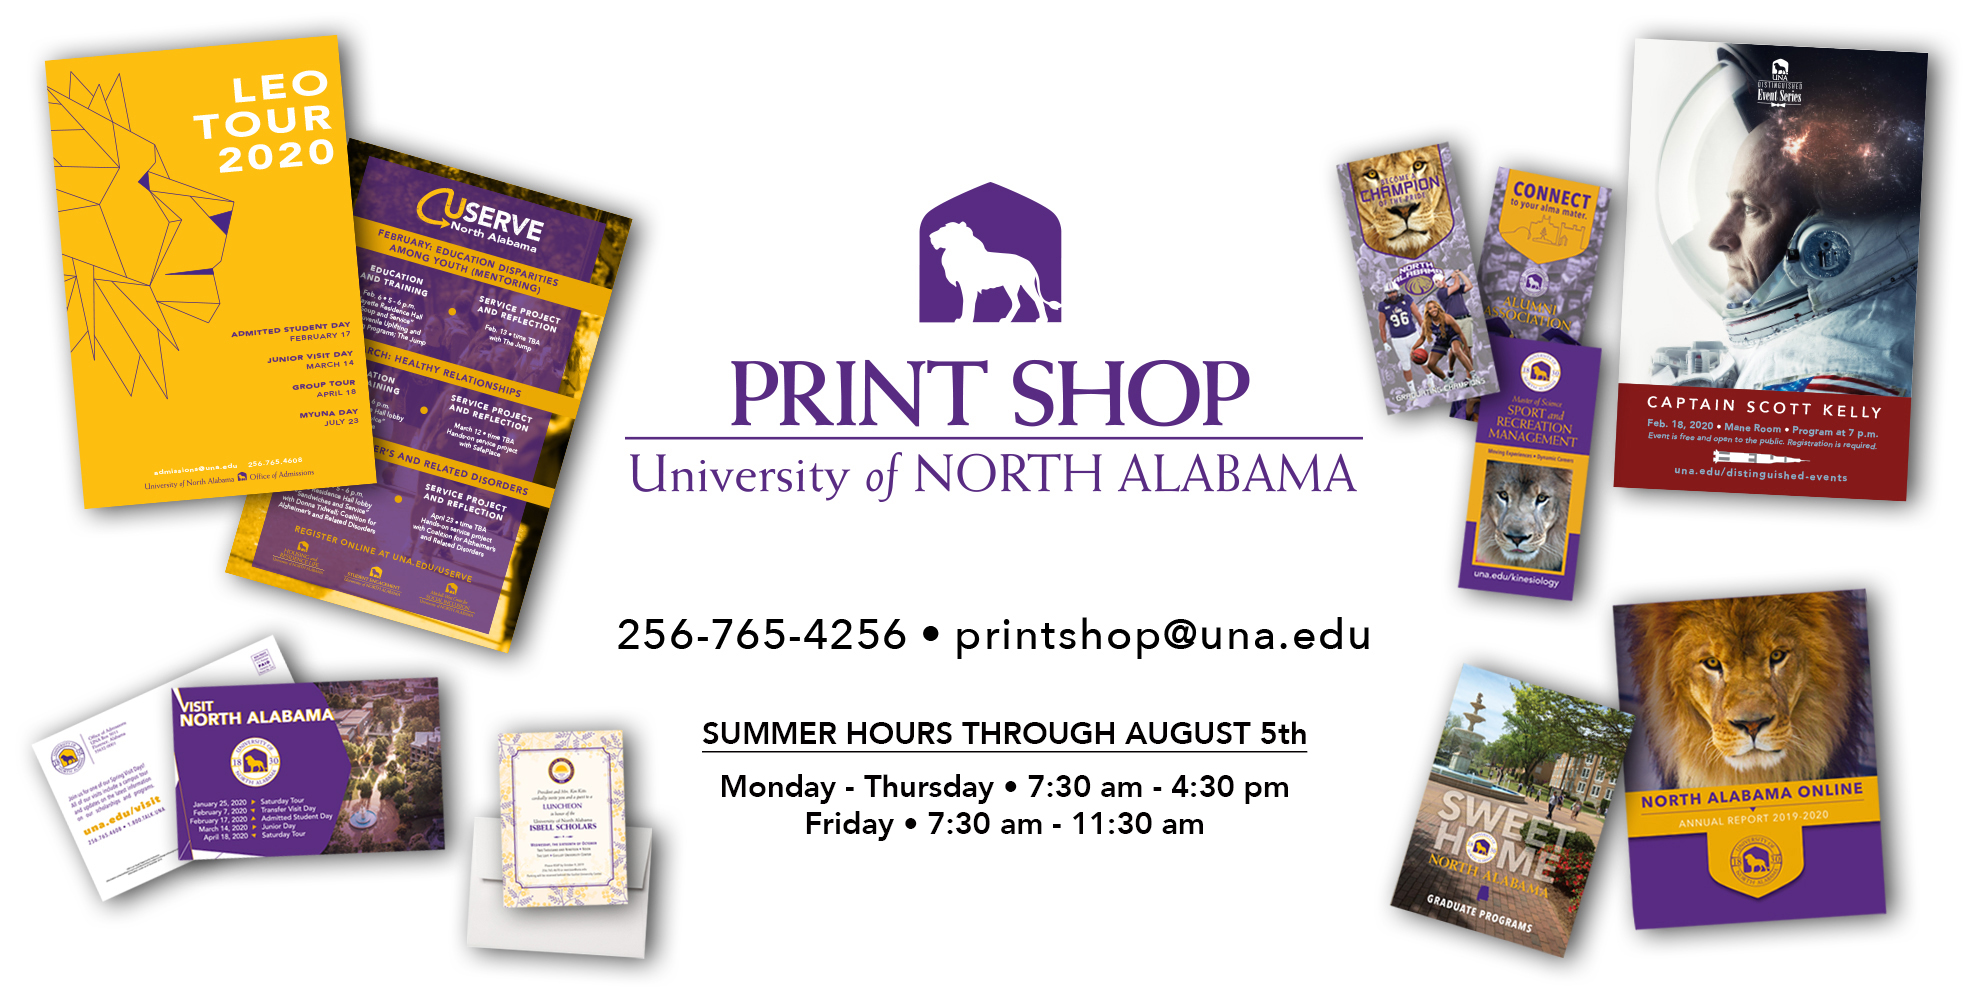 Print Shop, University of North Alabama